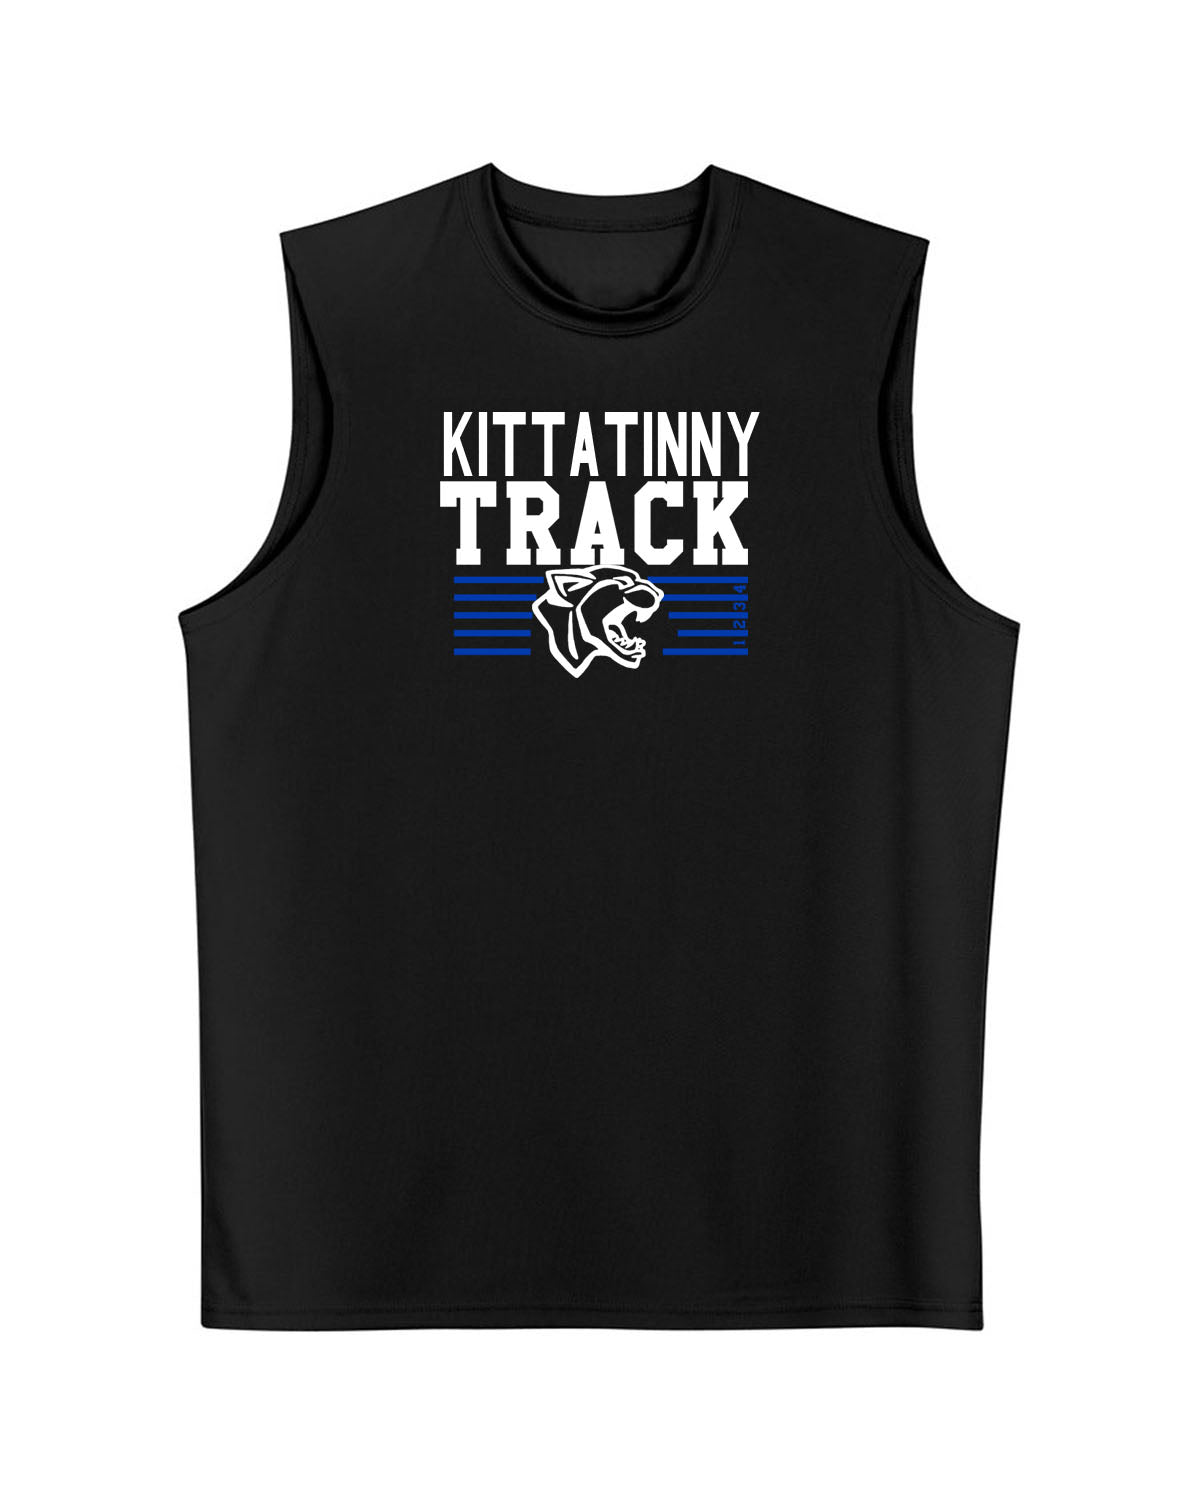 Kittatinny Track Men's Performance Tank Top Design 5